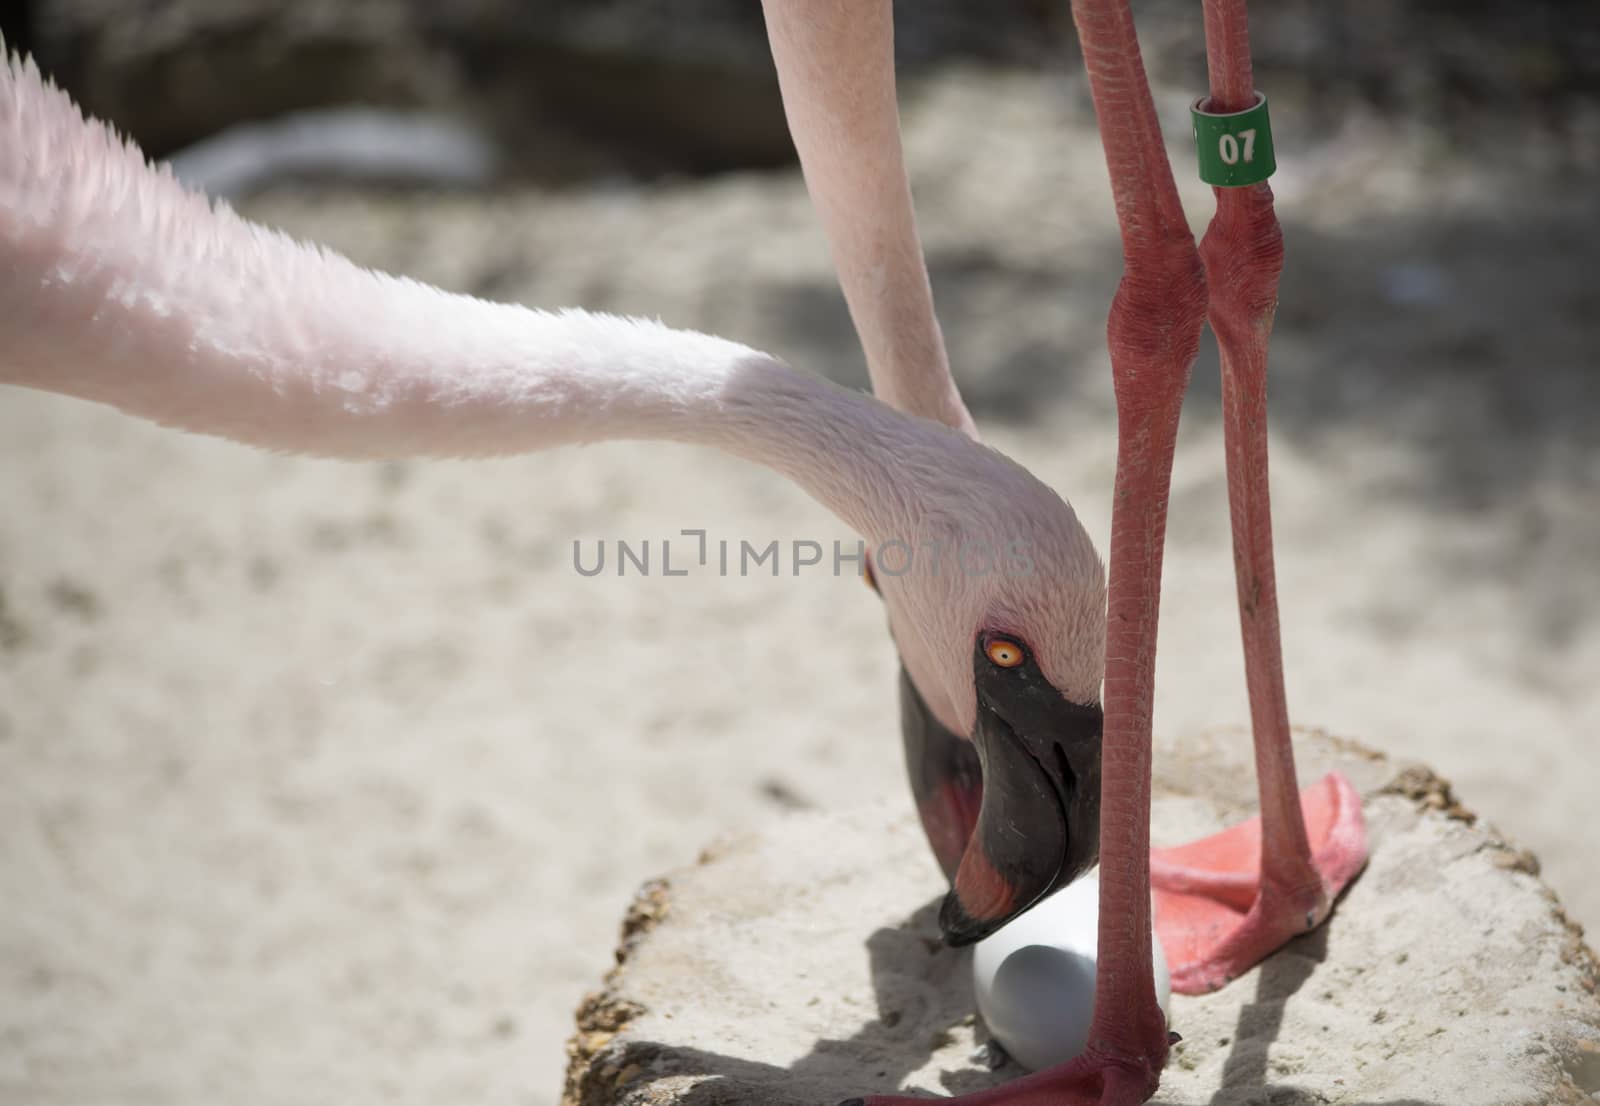 Flamingos guarding eggs